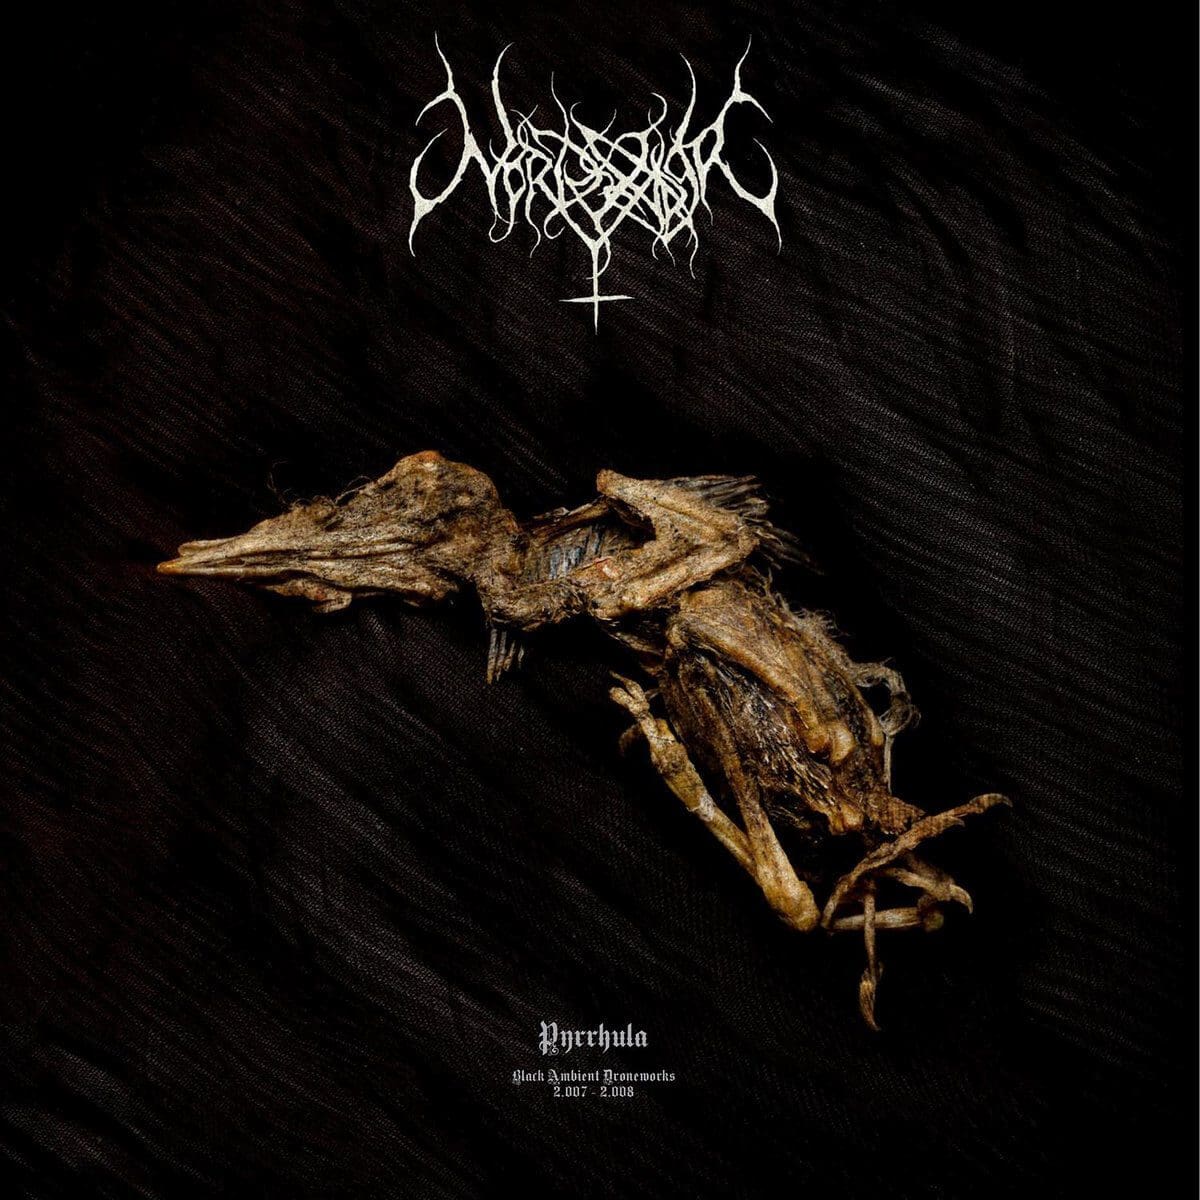 Nordvargr releases vinyl edition of 2008's 'Pyrrhula' album